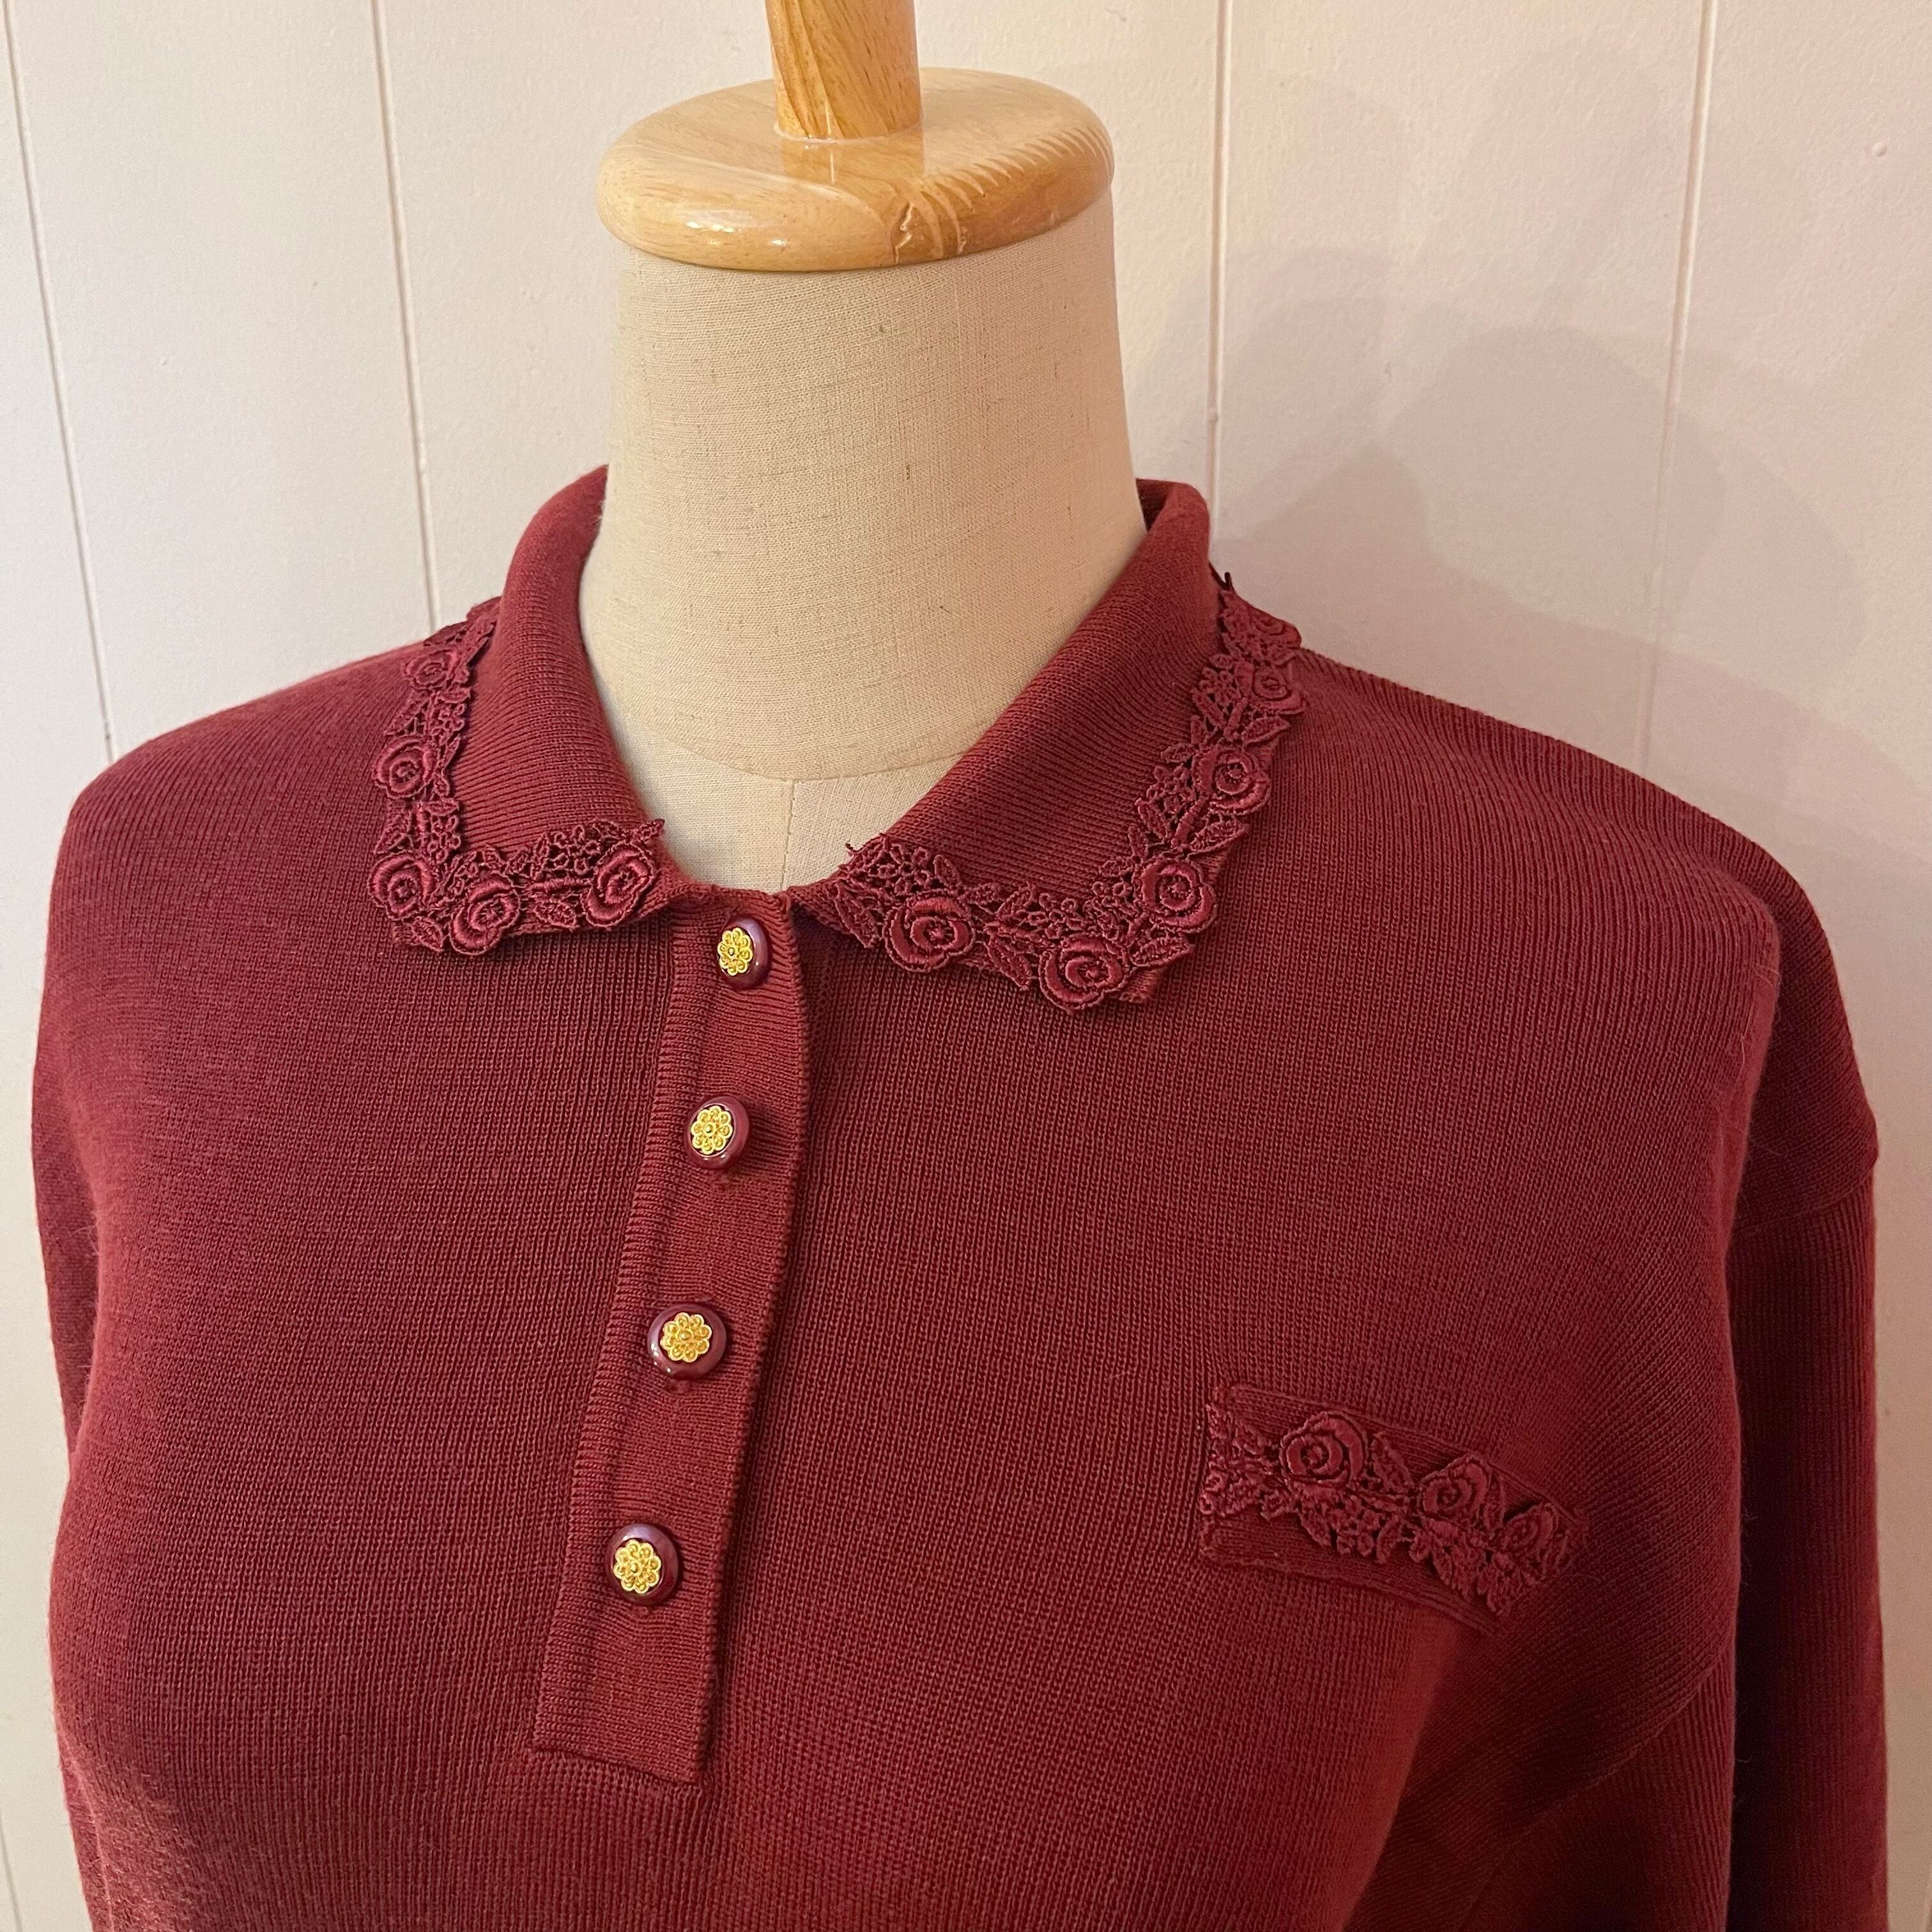 rose lace collar bordeaux knit polo